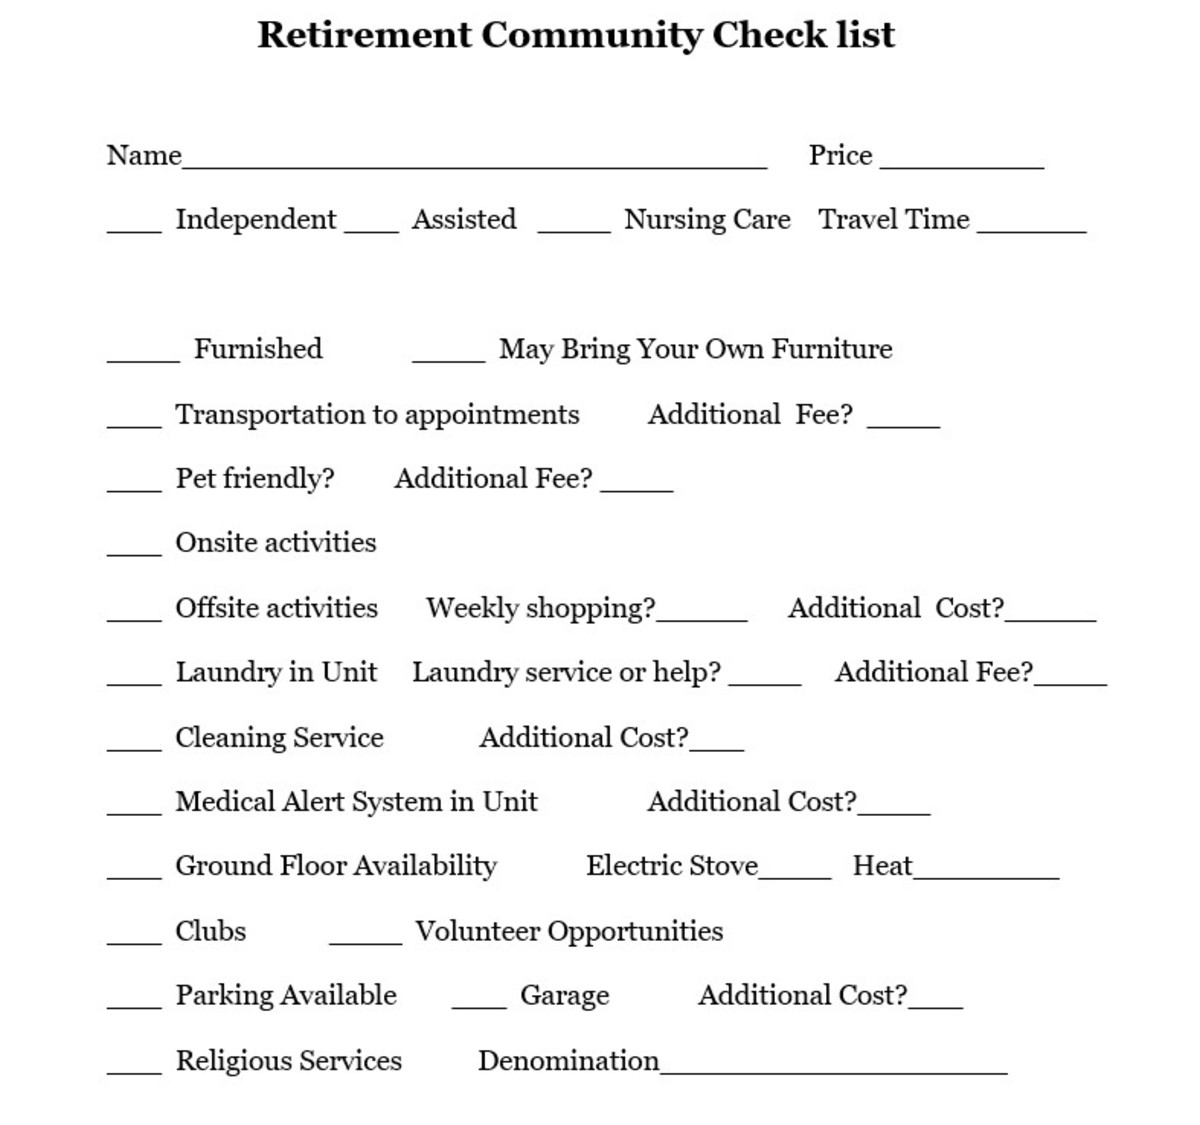 Retirement Community Check List